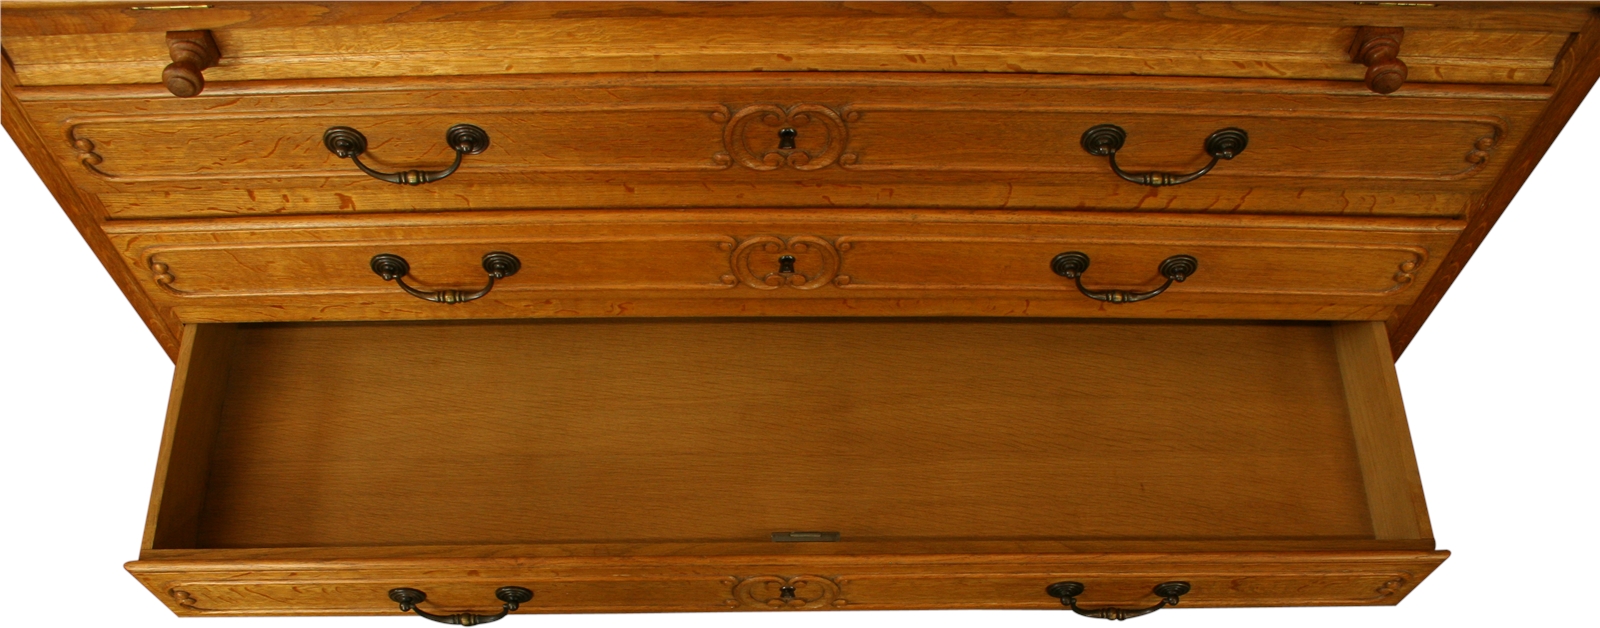 Vintage French Secretary Desk, Quartersawn Golden Oak, Carved, Louis XV Style-Image 15